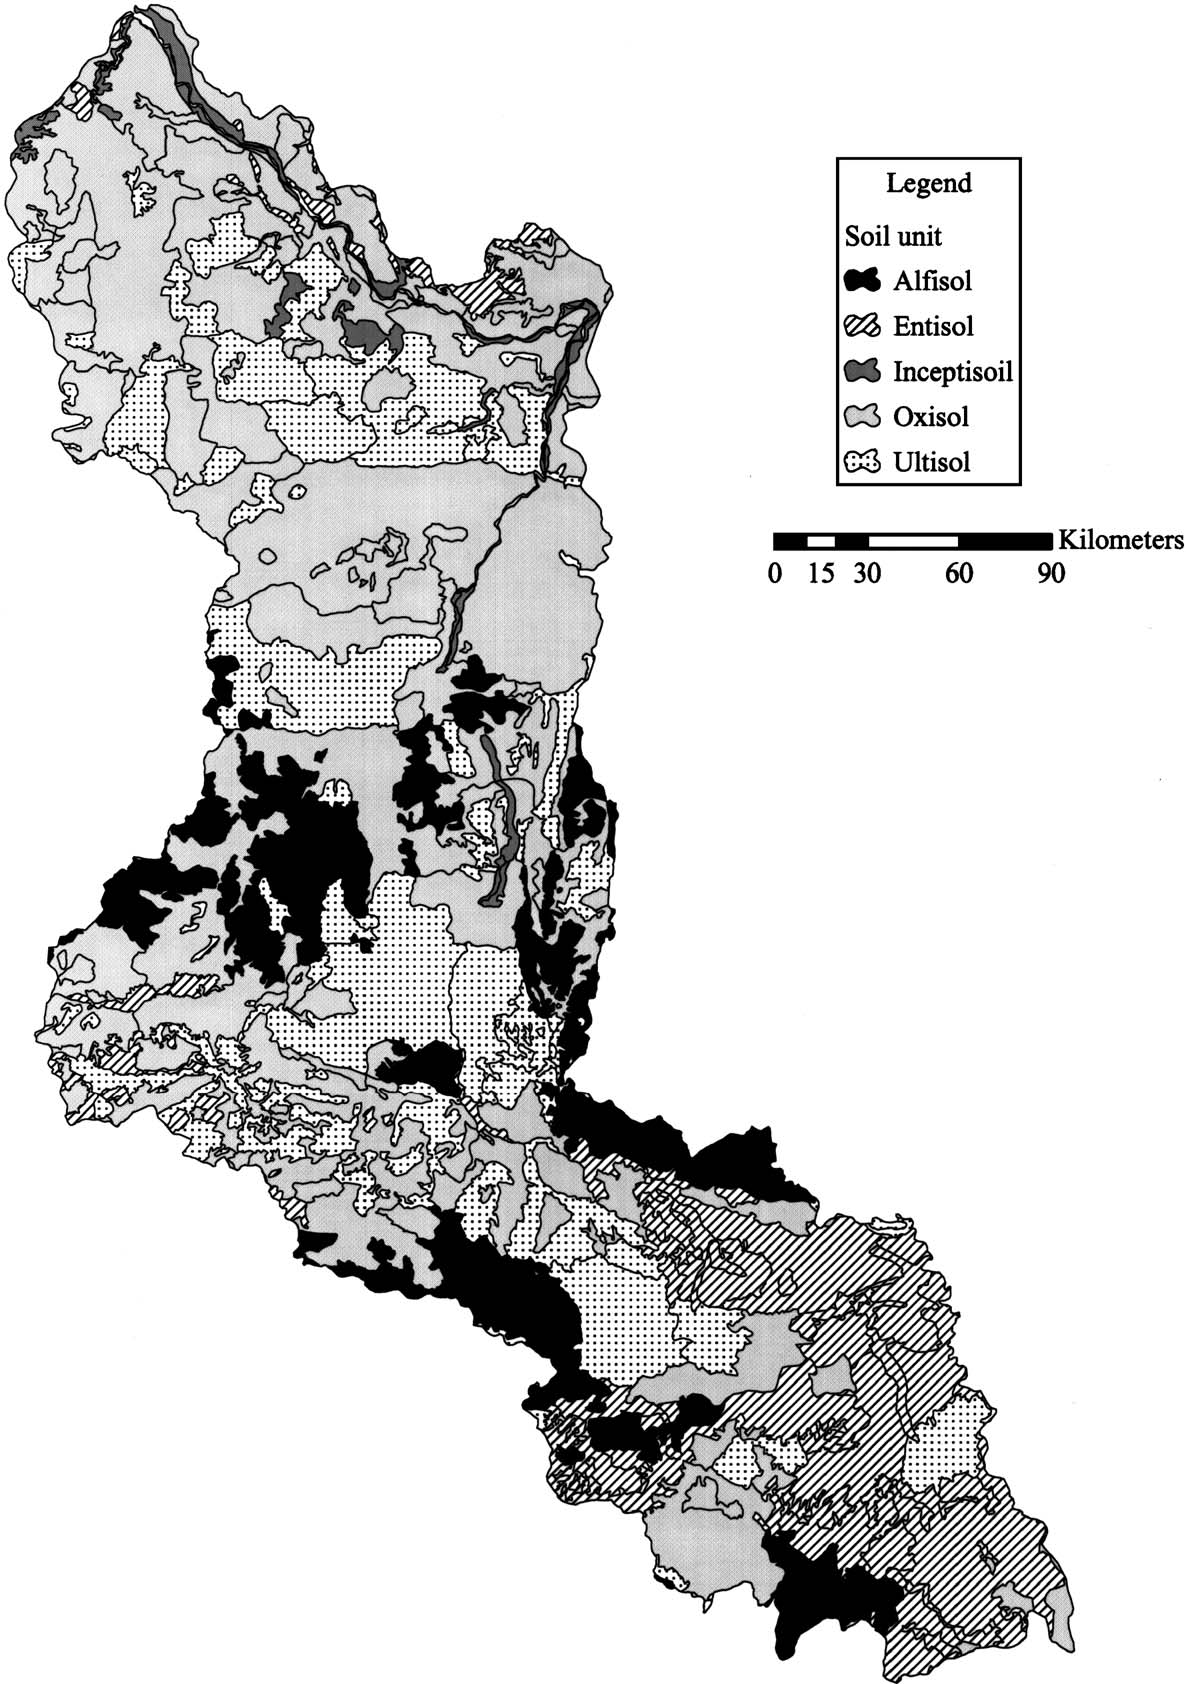 soil map ji-Parana river basin